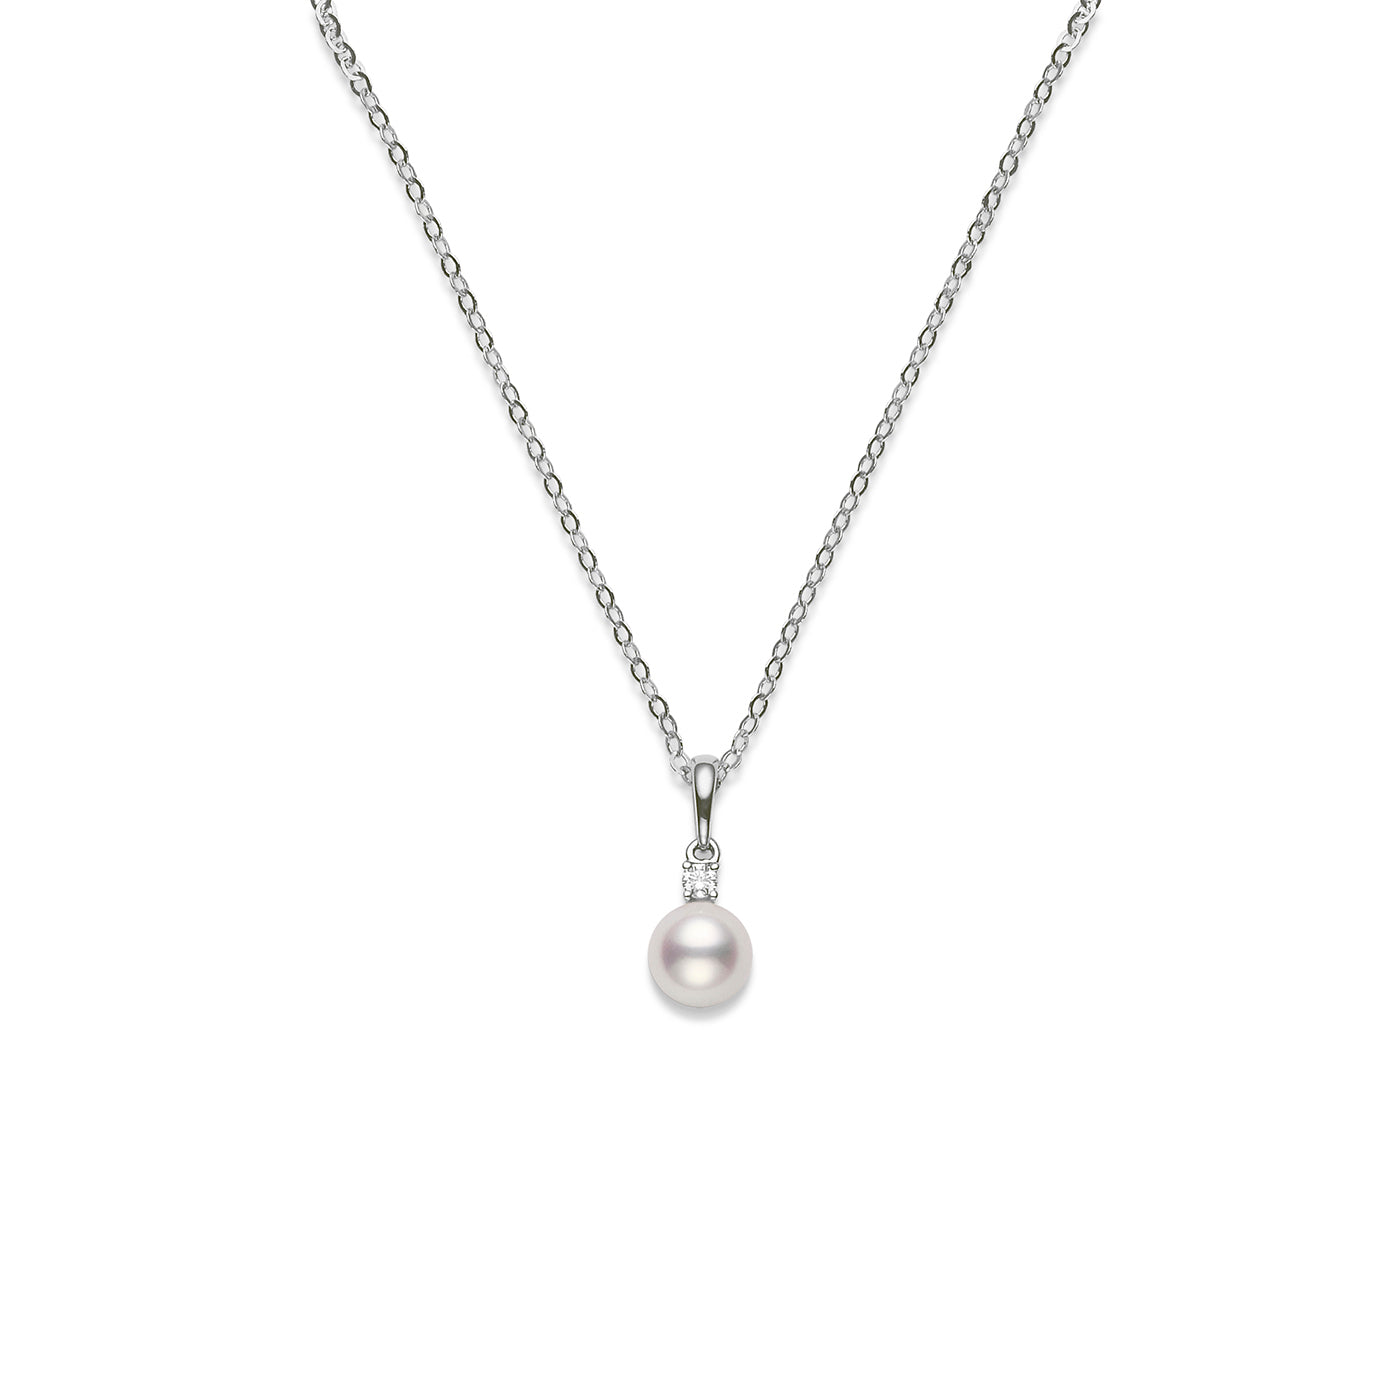 White Gold Diamond Pearl Pendant